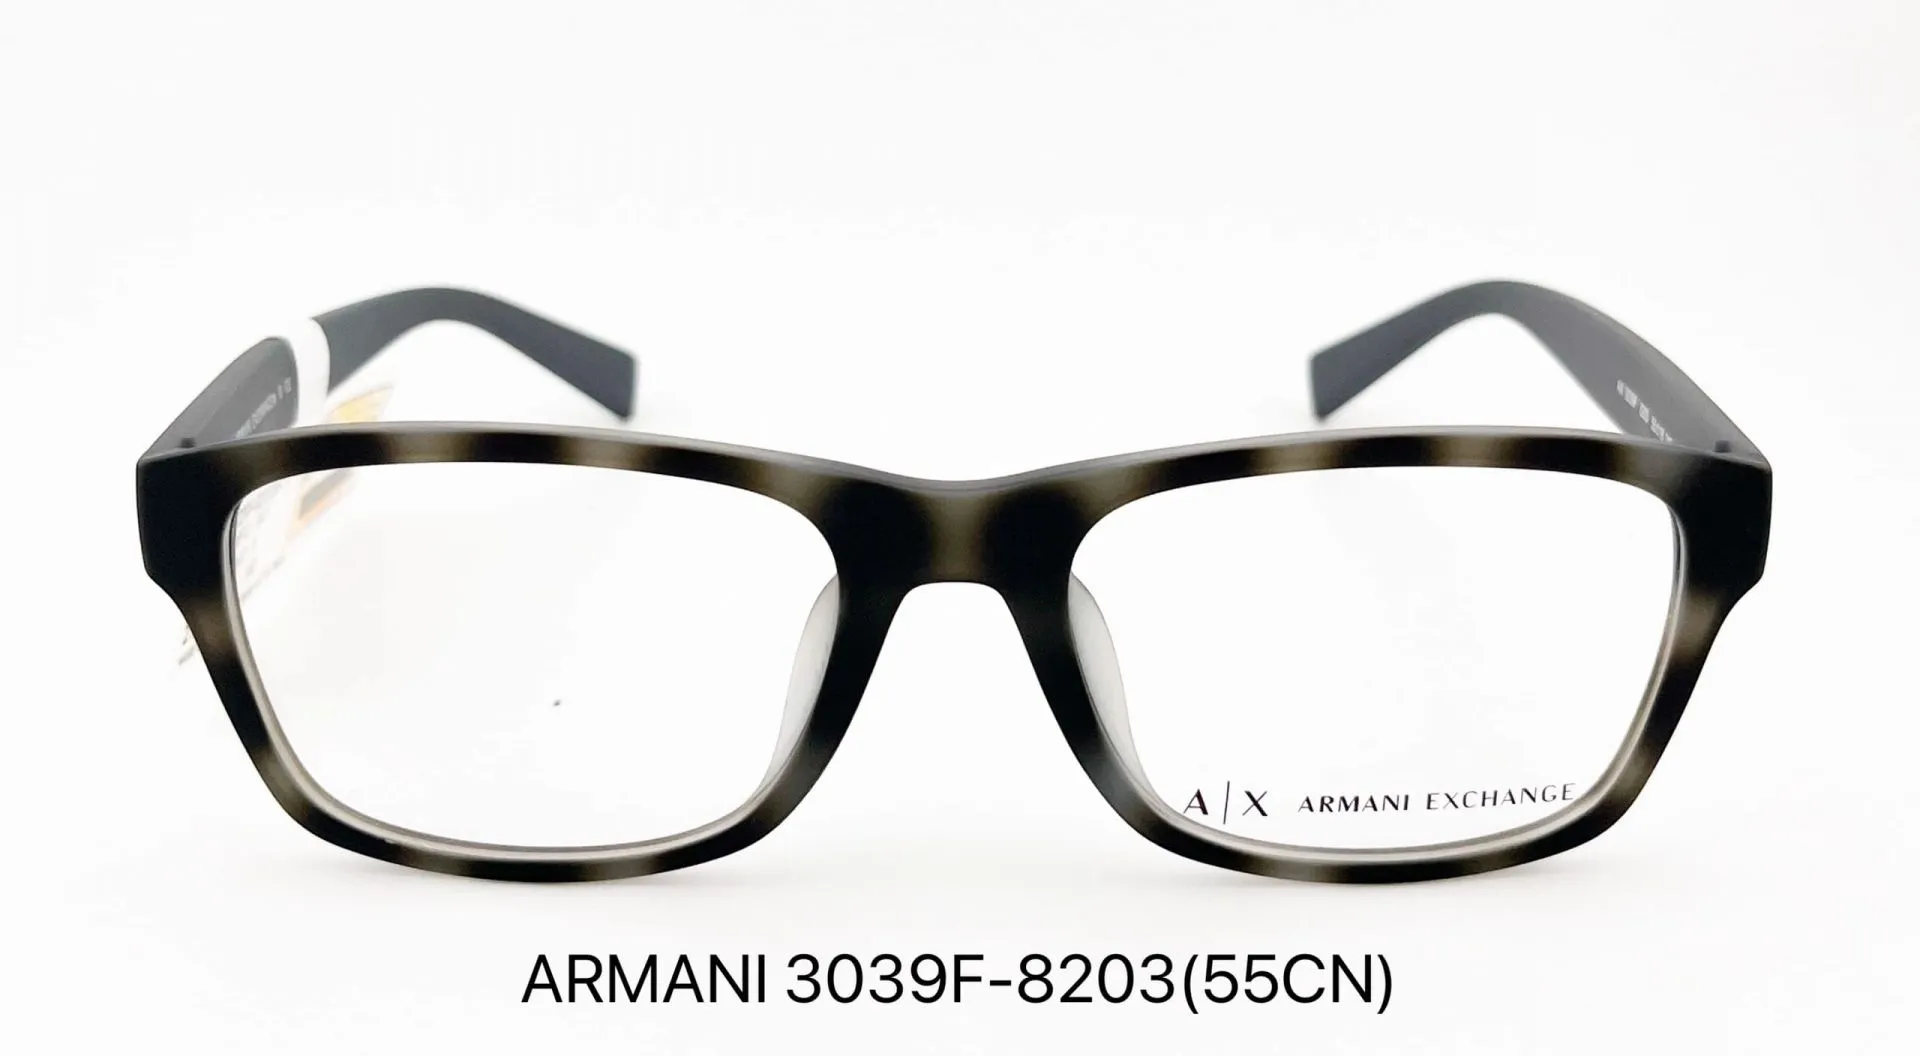 Gọng kính ARMANI EXCHANGE 3039F-8203 (55CN)